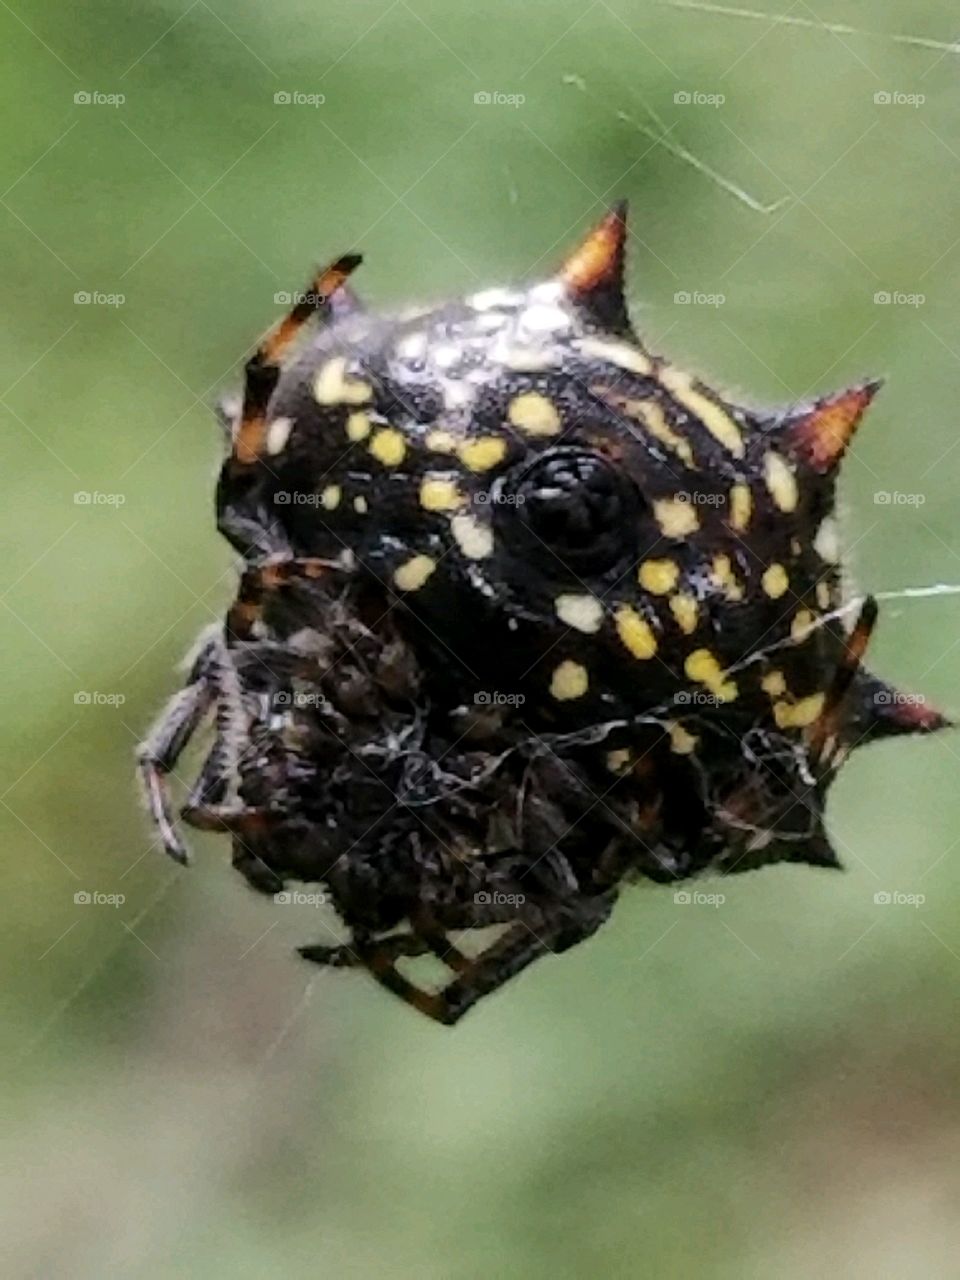 Spider close-up